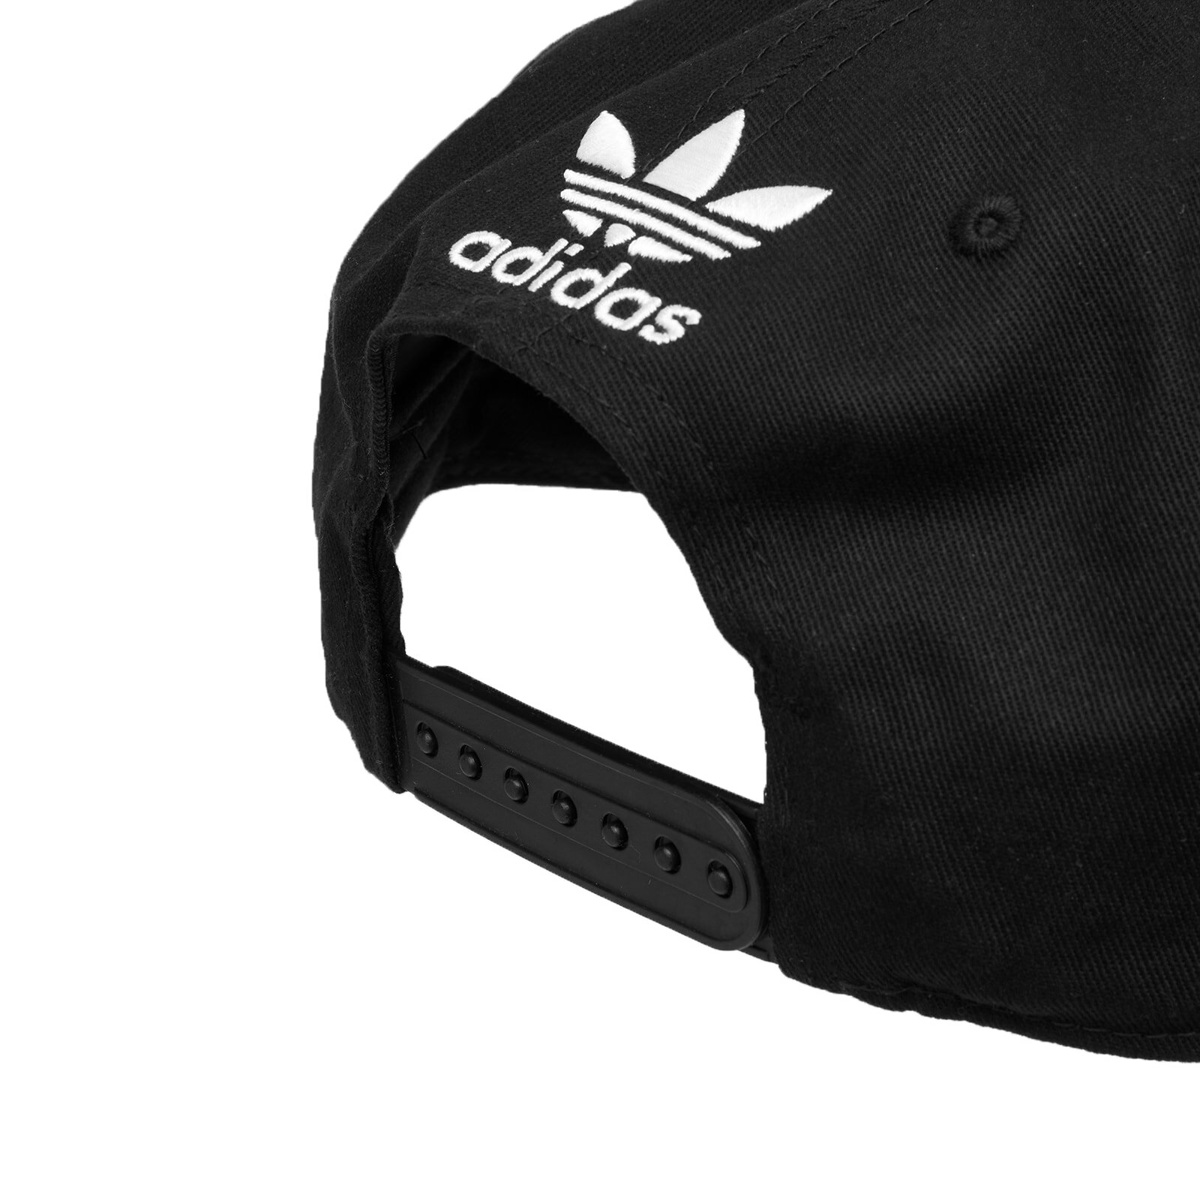 Adidas X Korn Cap in Black adidas